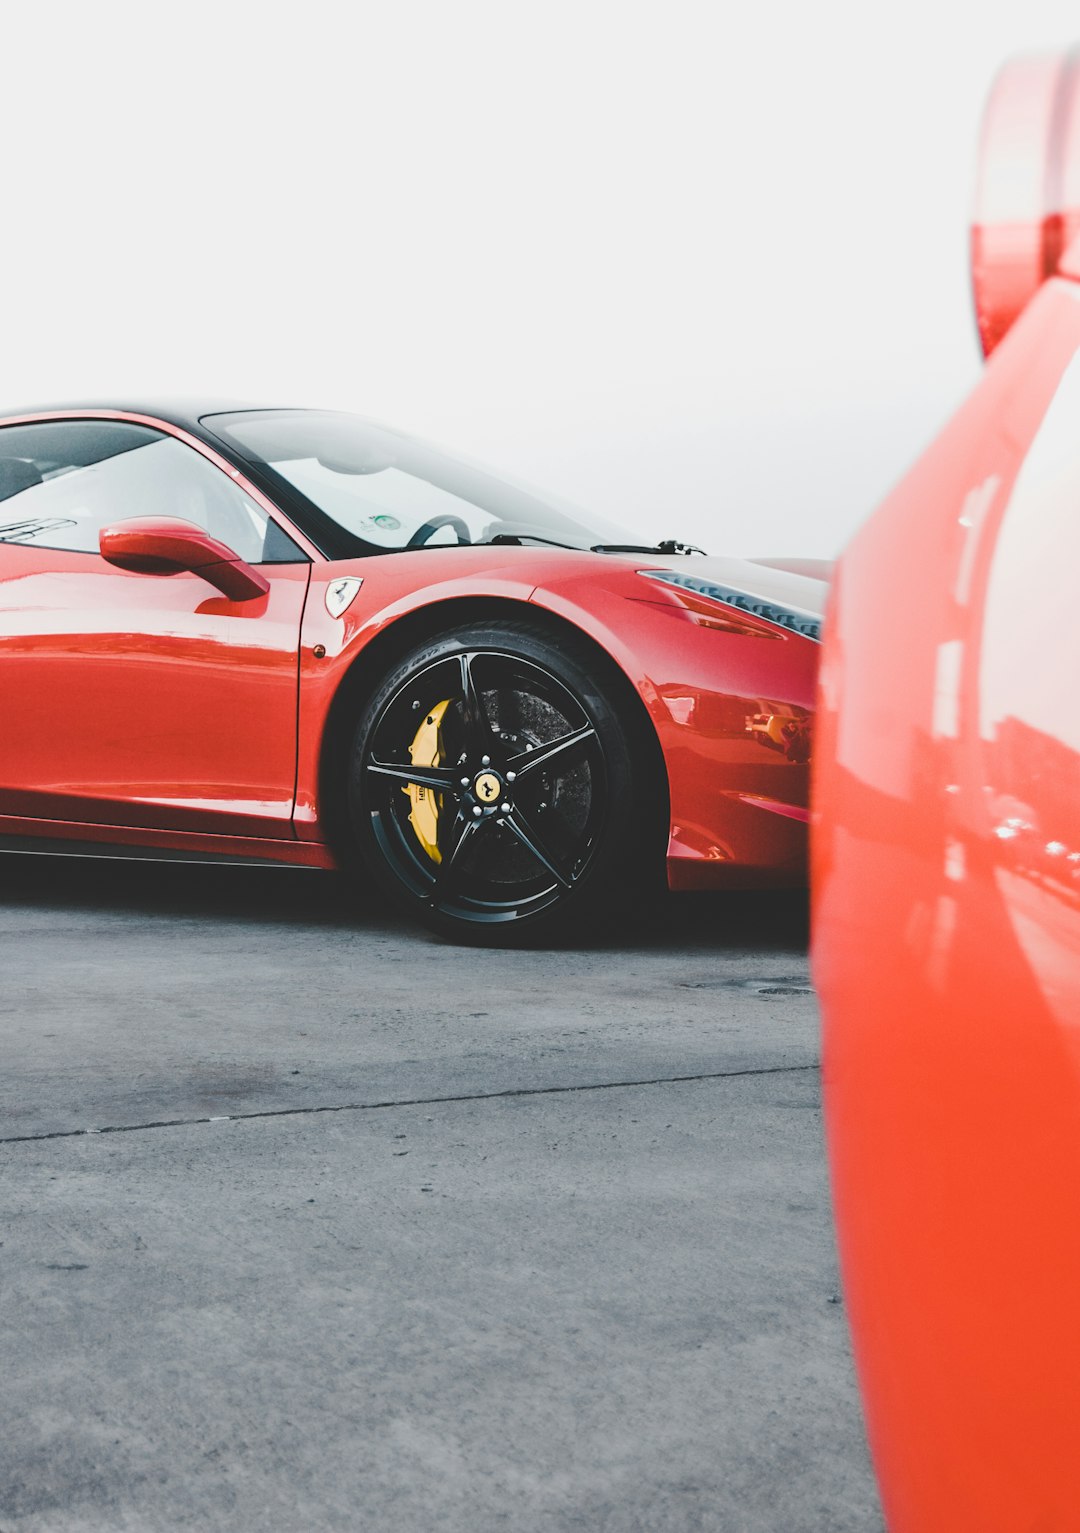 red Ferrari parked on asphalt road